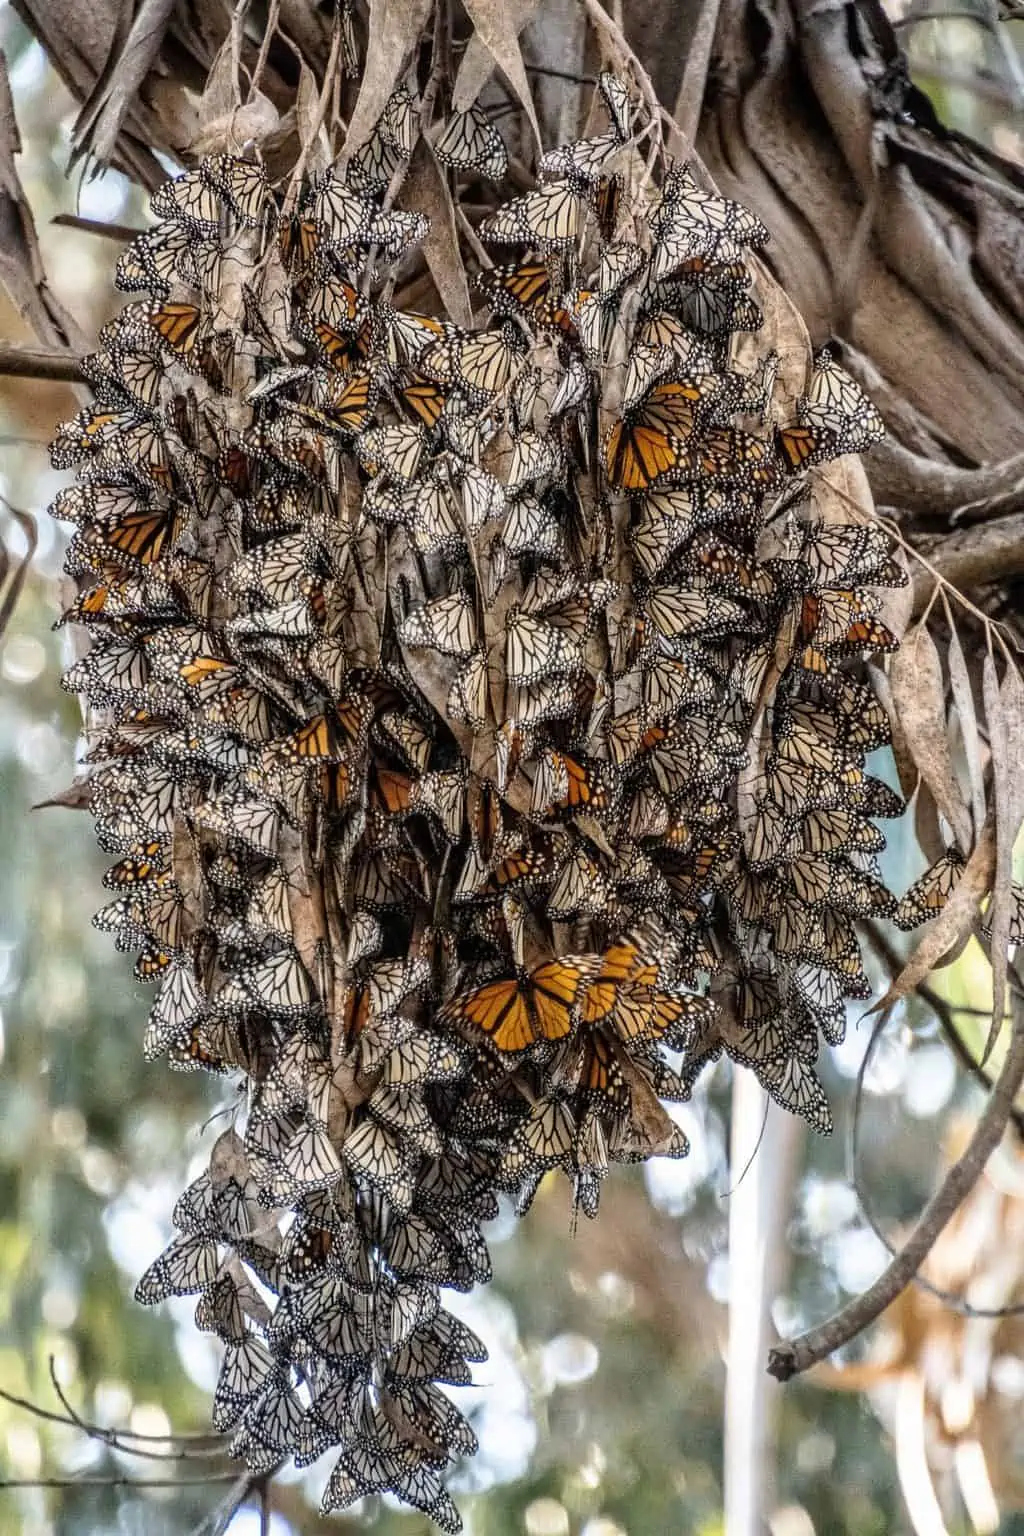 Santa Barbara butterfly grove